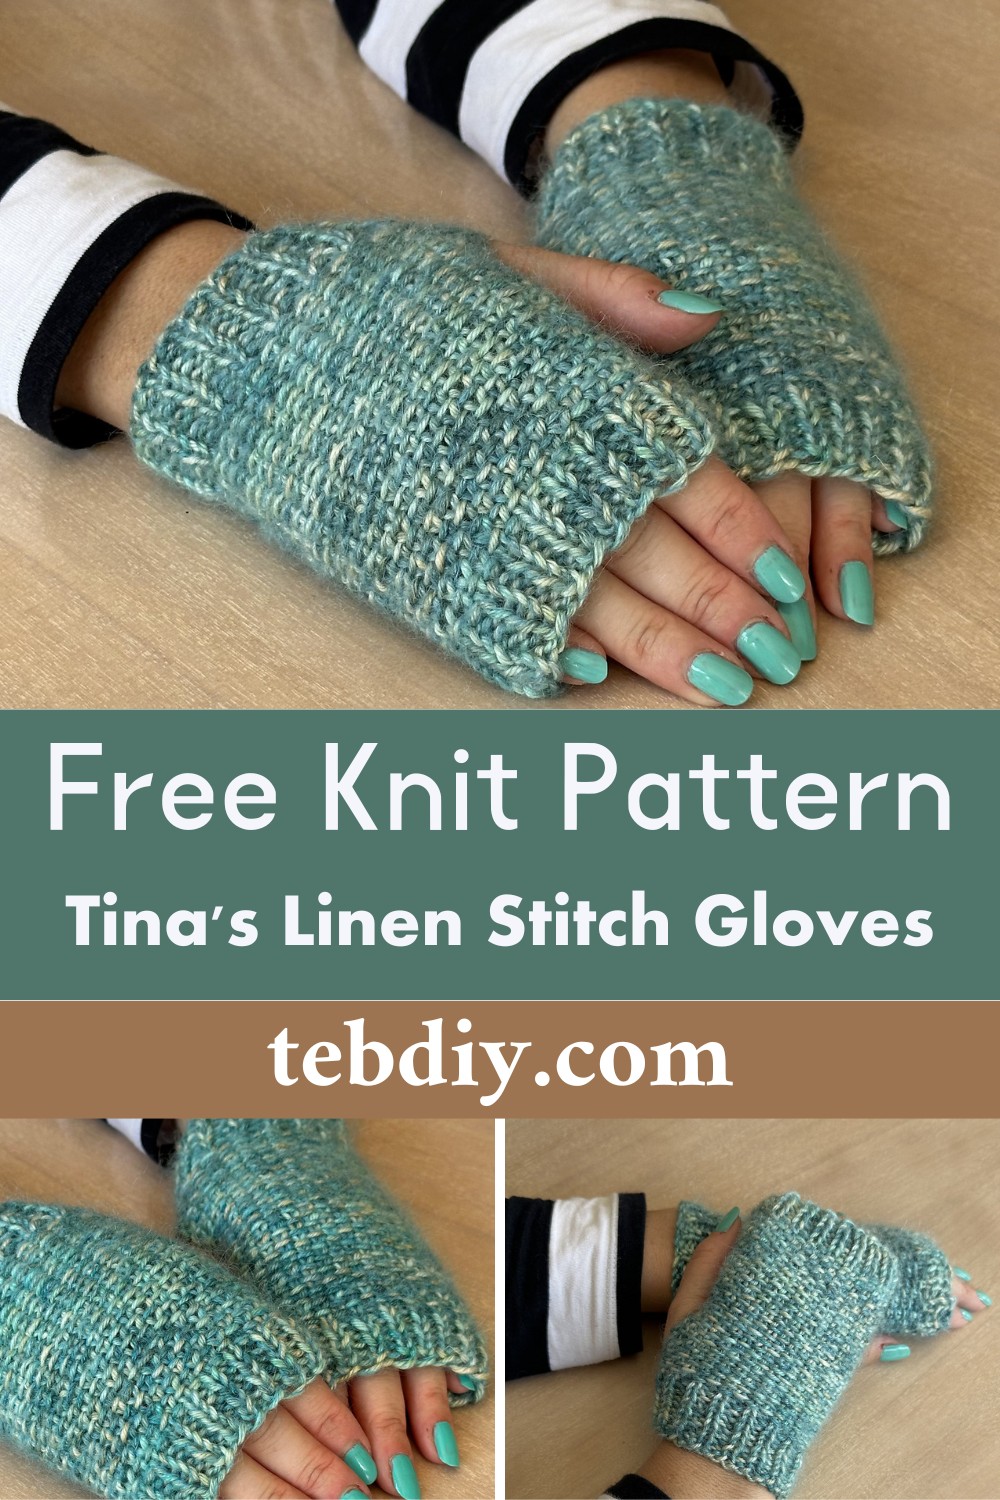 Tina's Linen Stitch Gloves